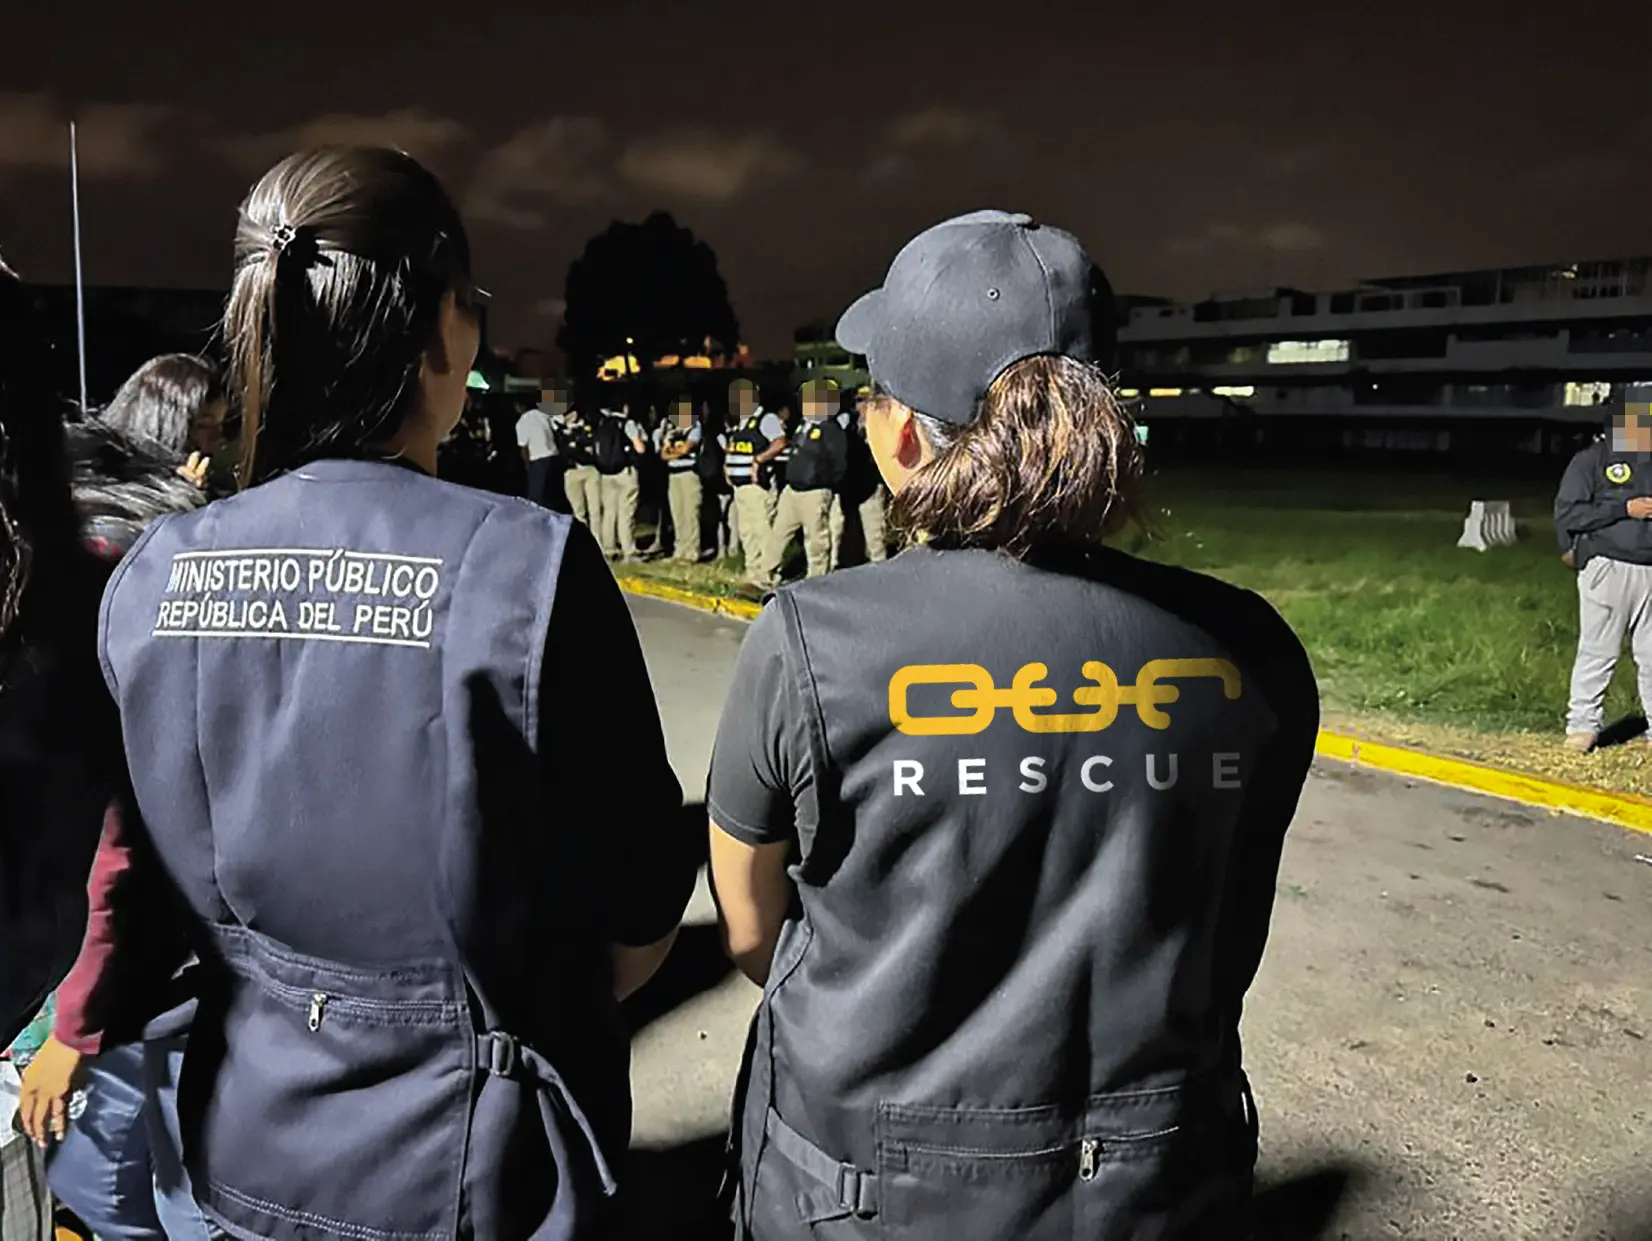 OUR Rescue assists alongside Ministerio Público República Del Perú